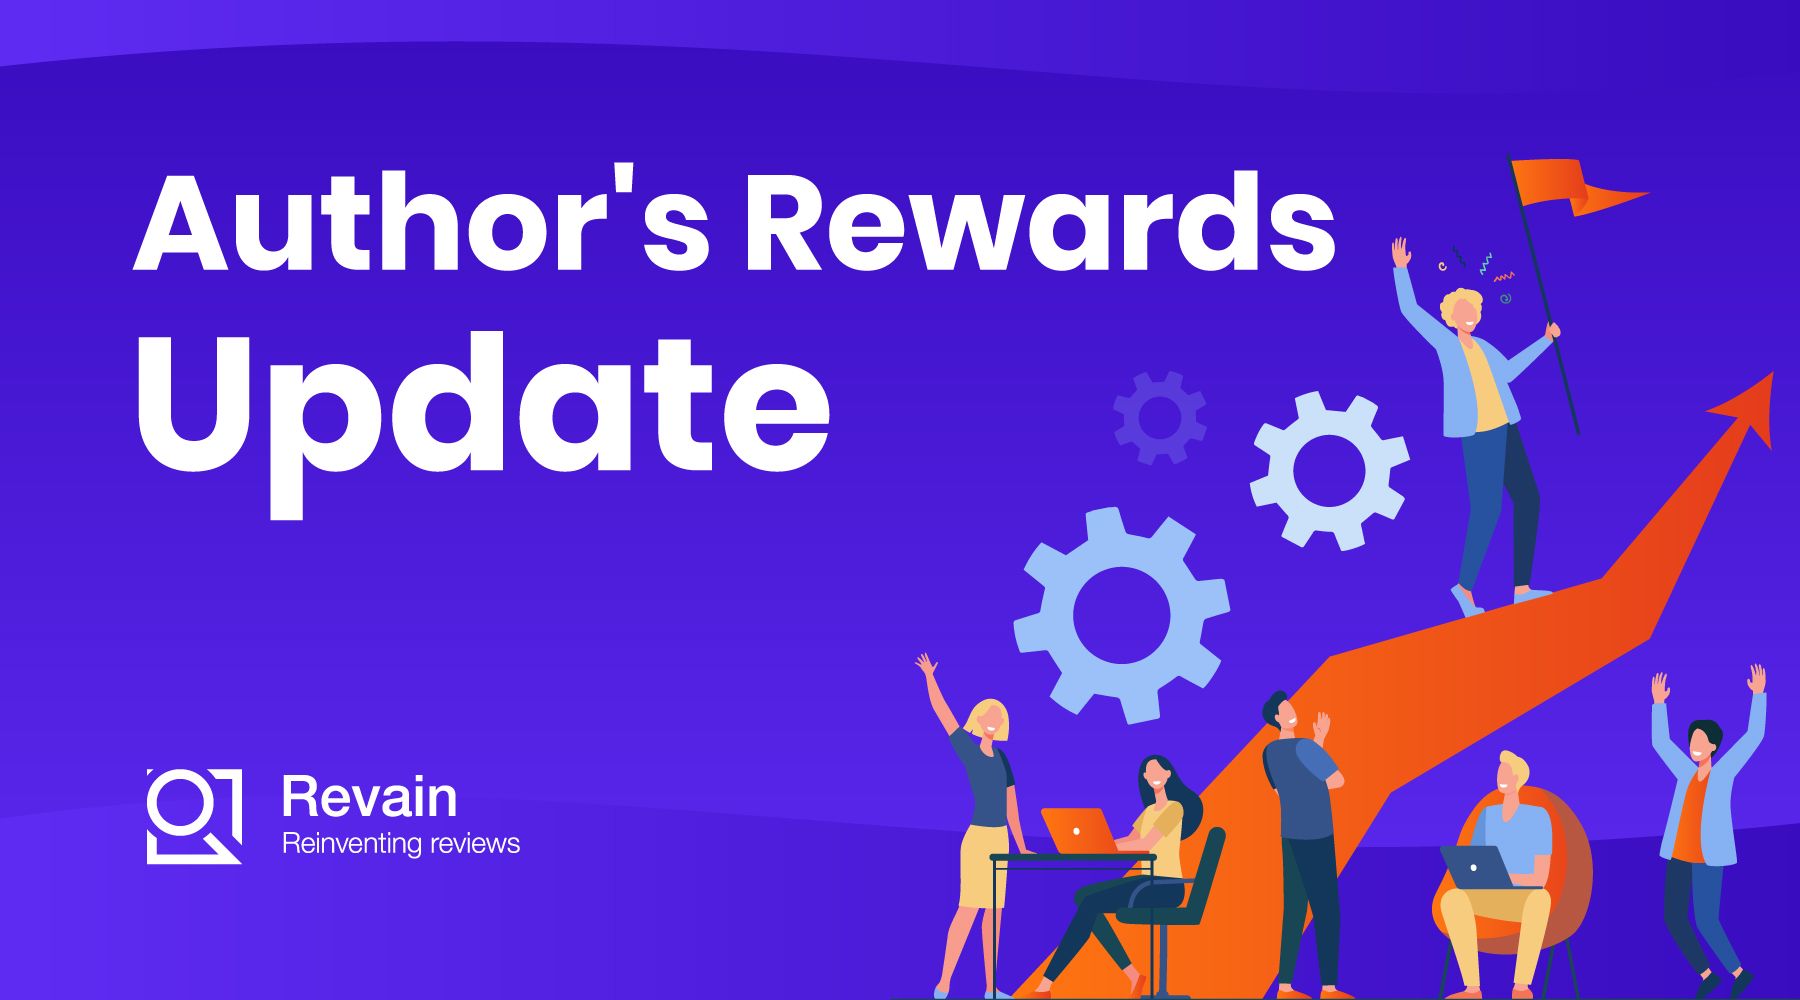 Author's Rewards Update